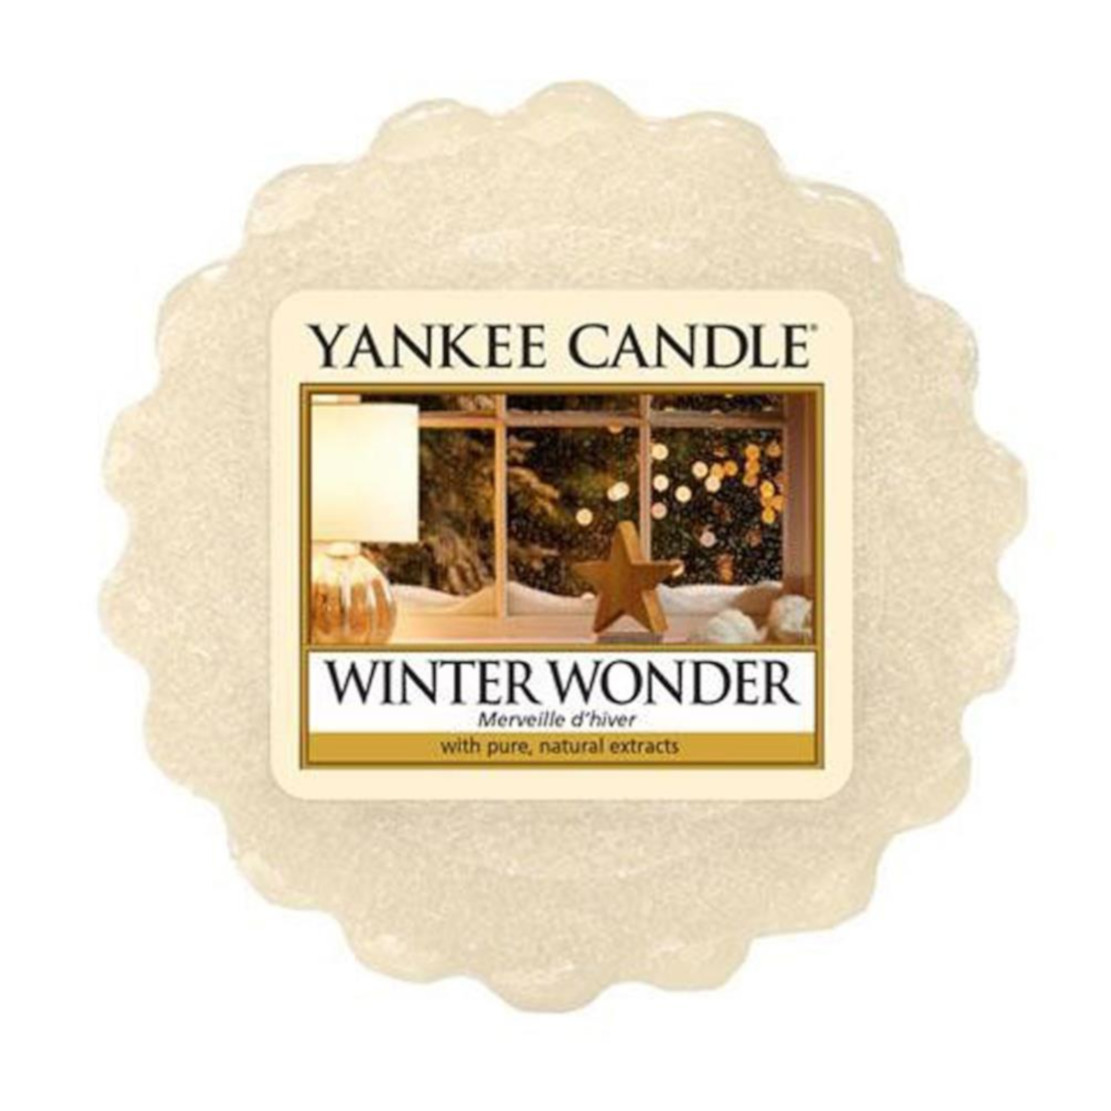 Yankee Candle Winter Wonder Wax Melt Tart